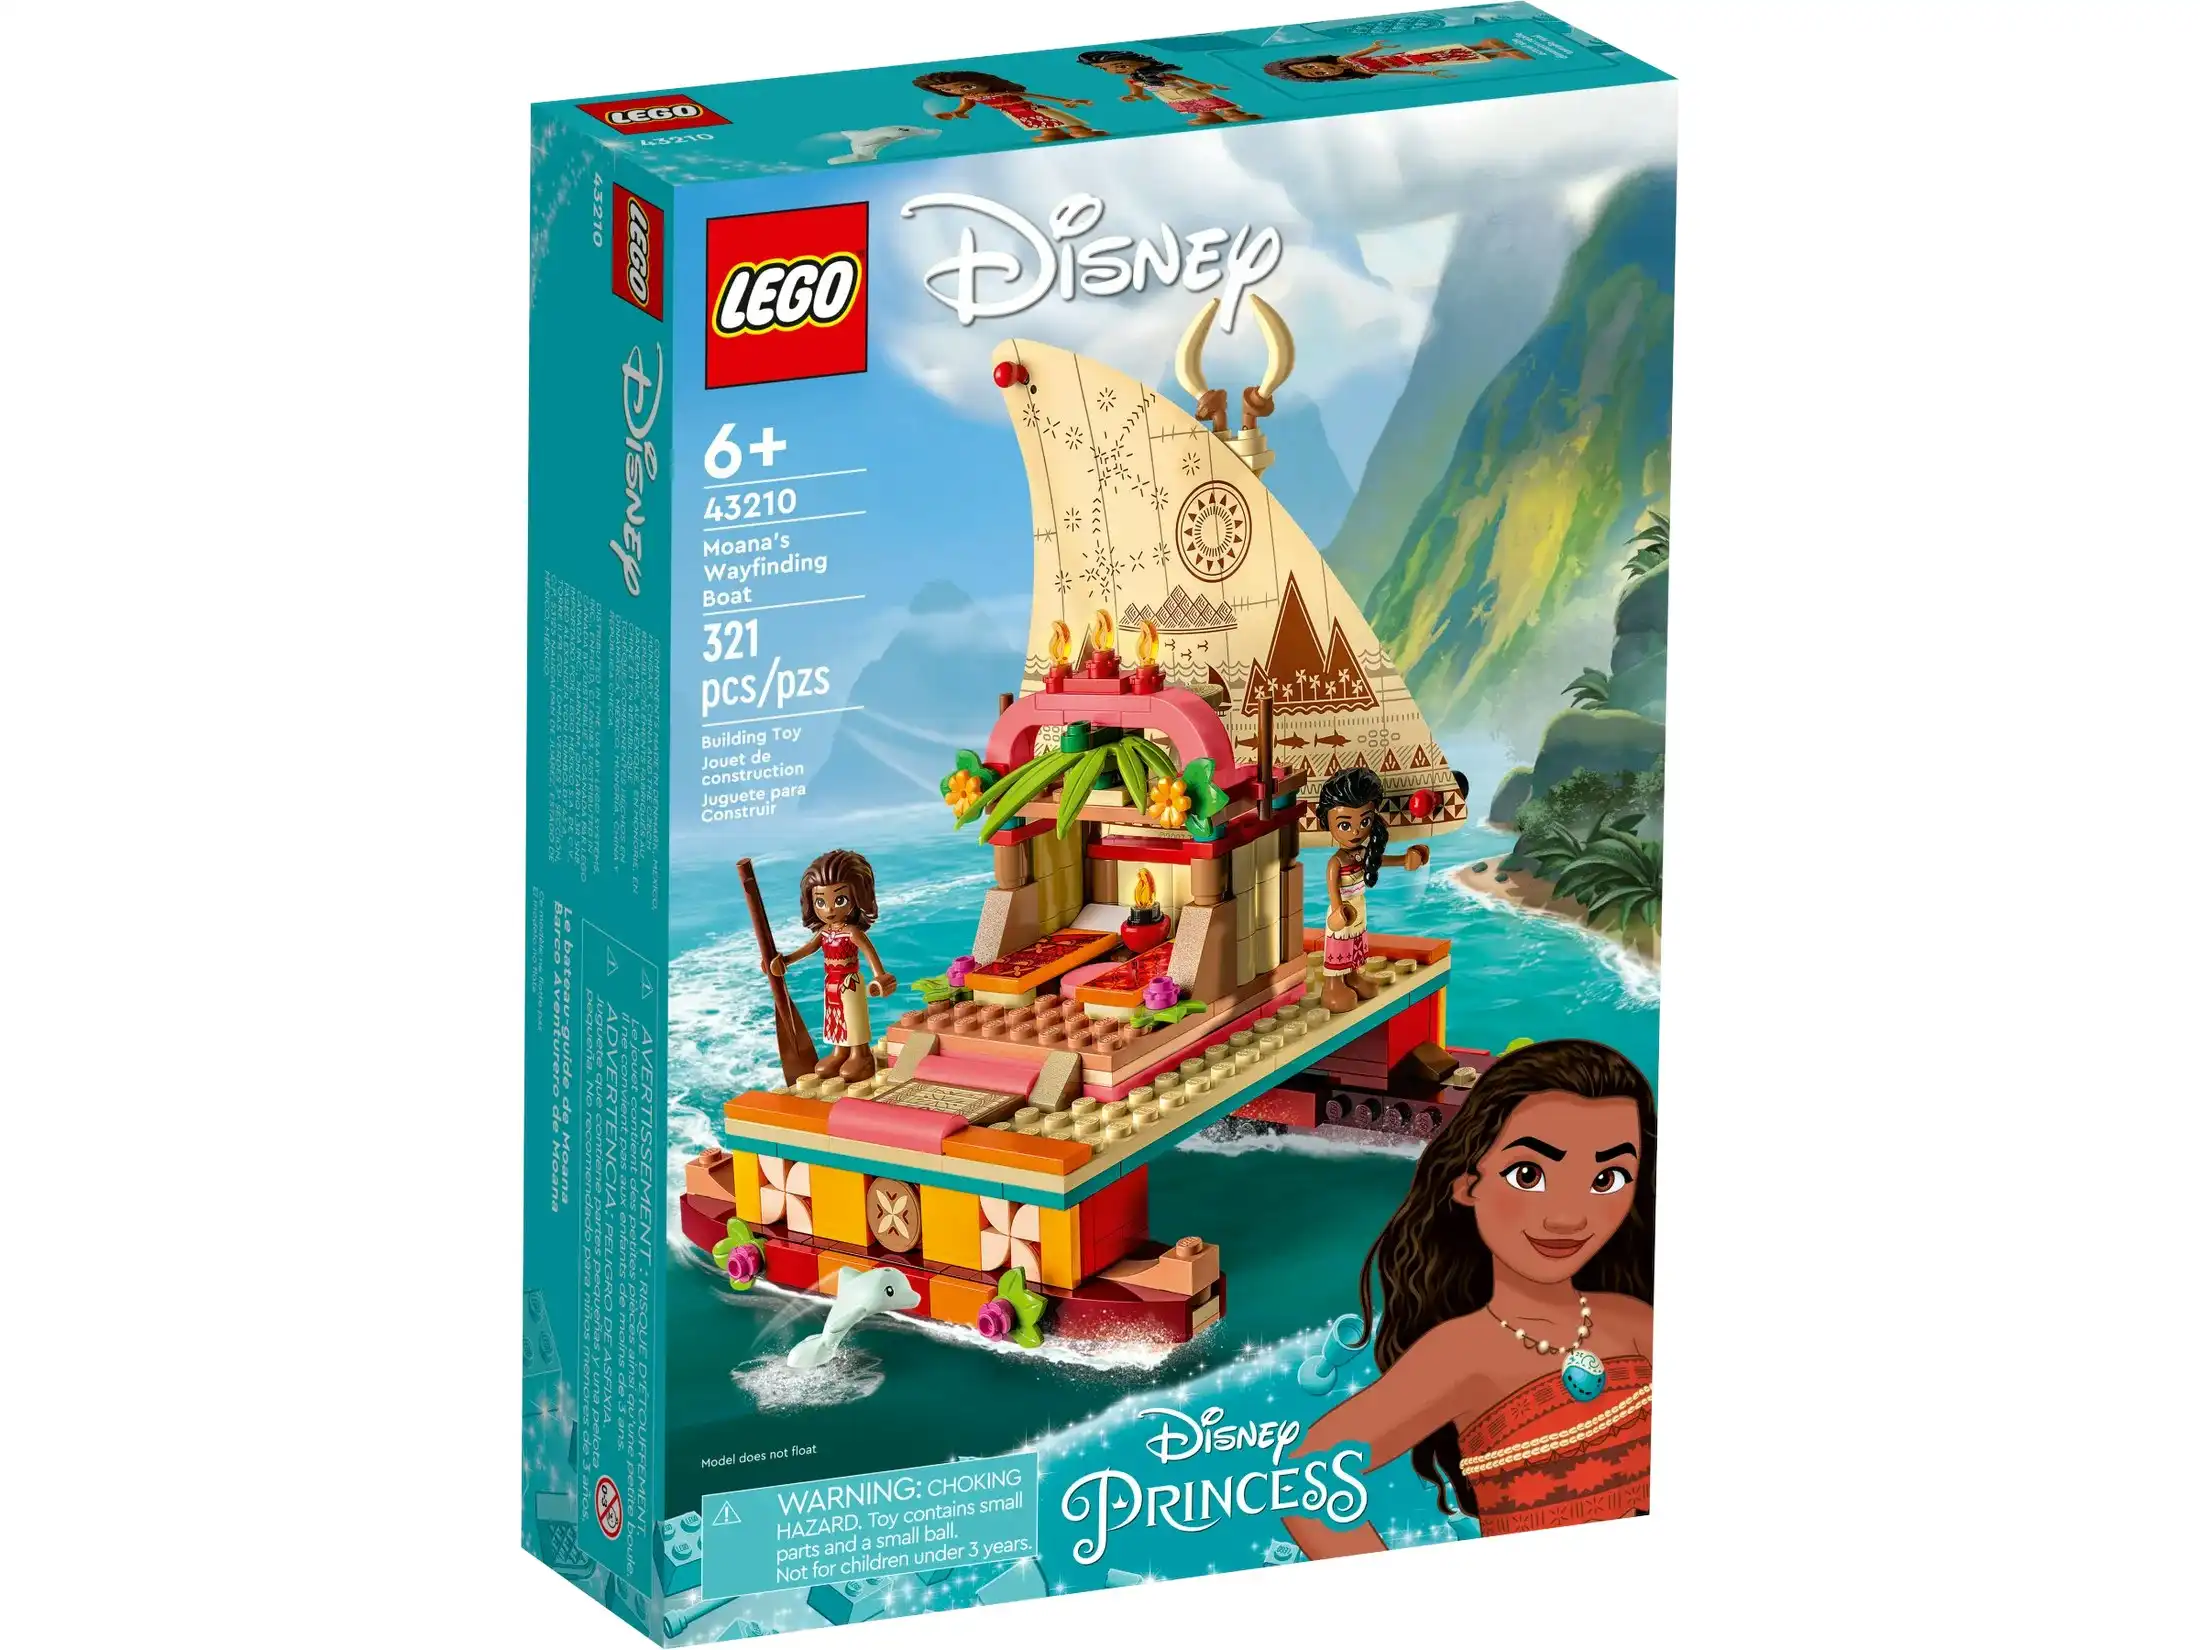 LEGO 43210 Moana's Wayfinding Boat - Disney Princess